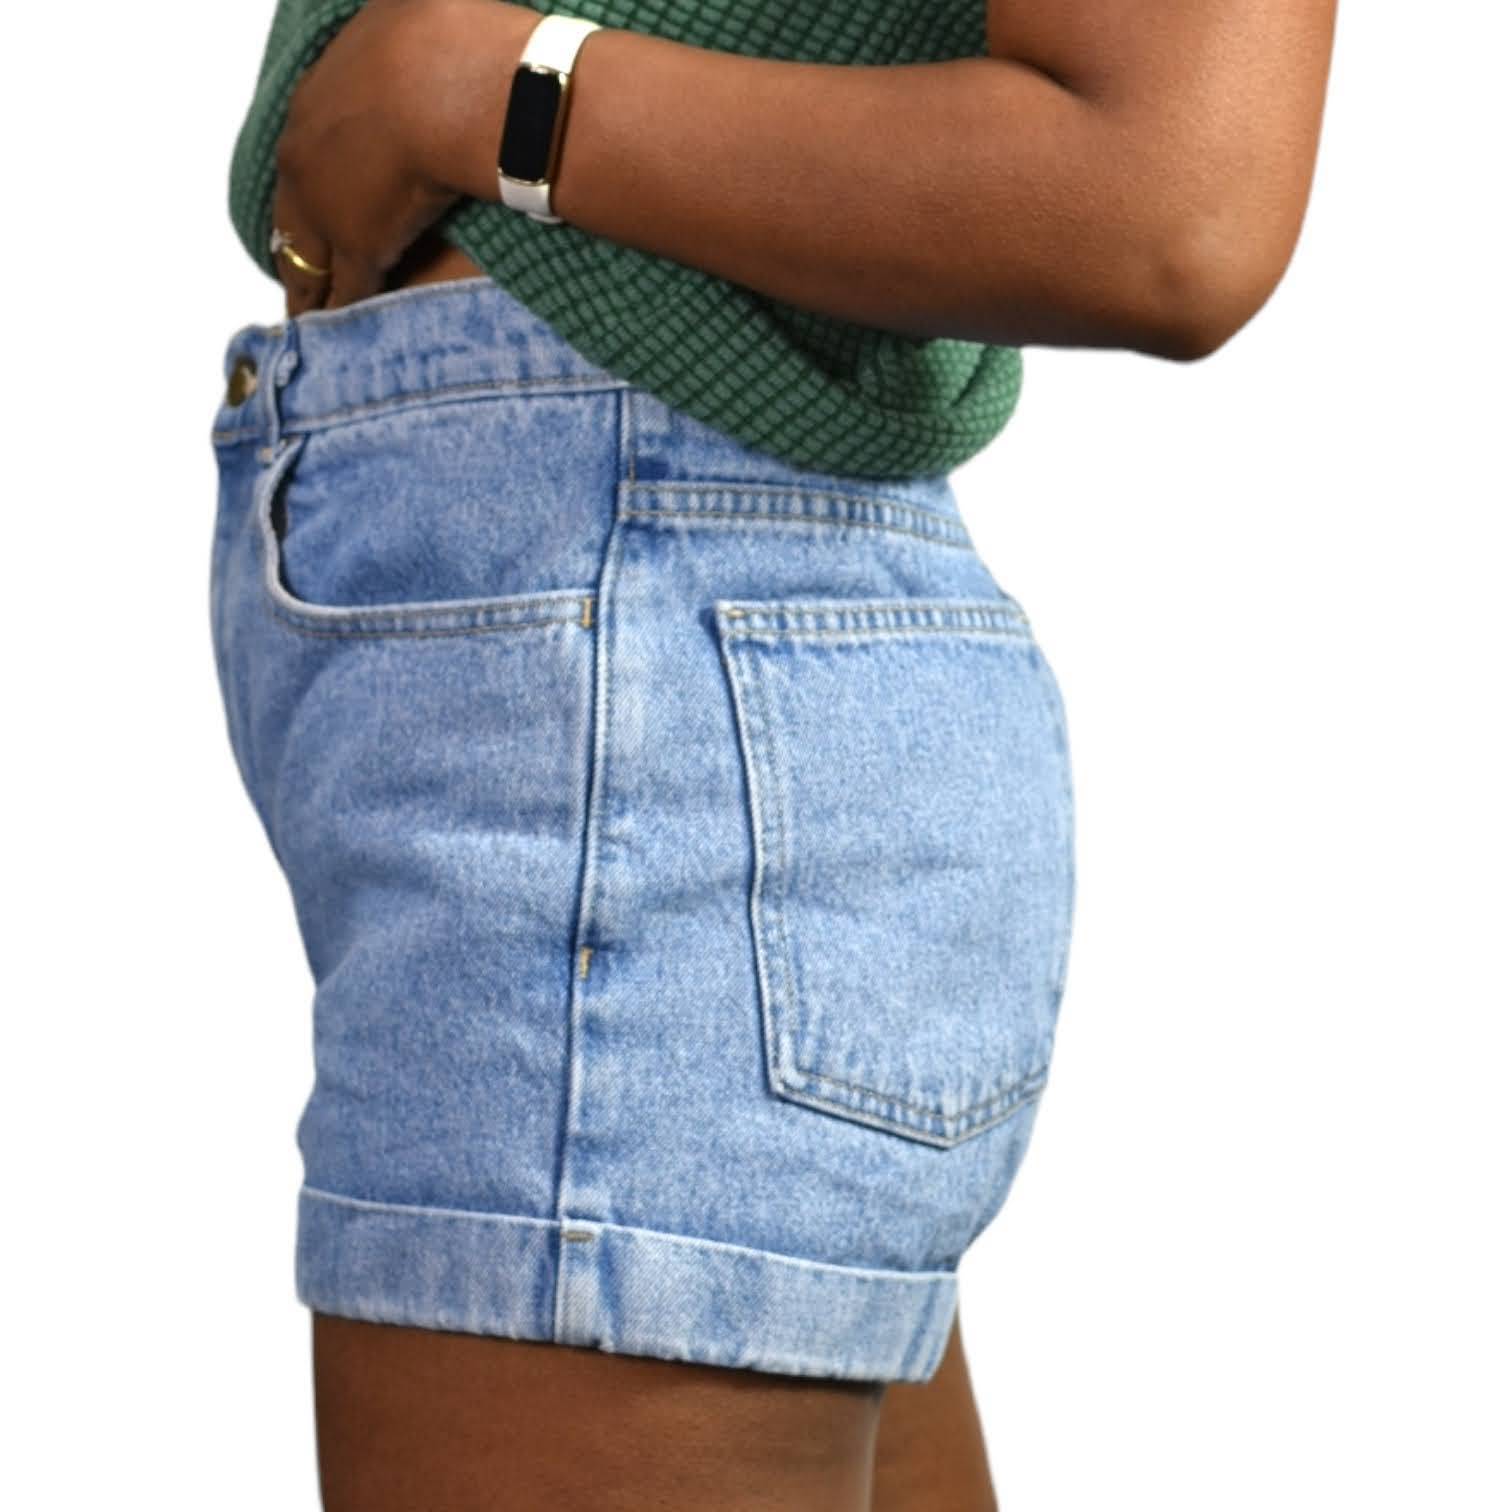 American Apparel High Rise Jean Shorts Cuffed Blue Light Wash Cotton Size 29